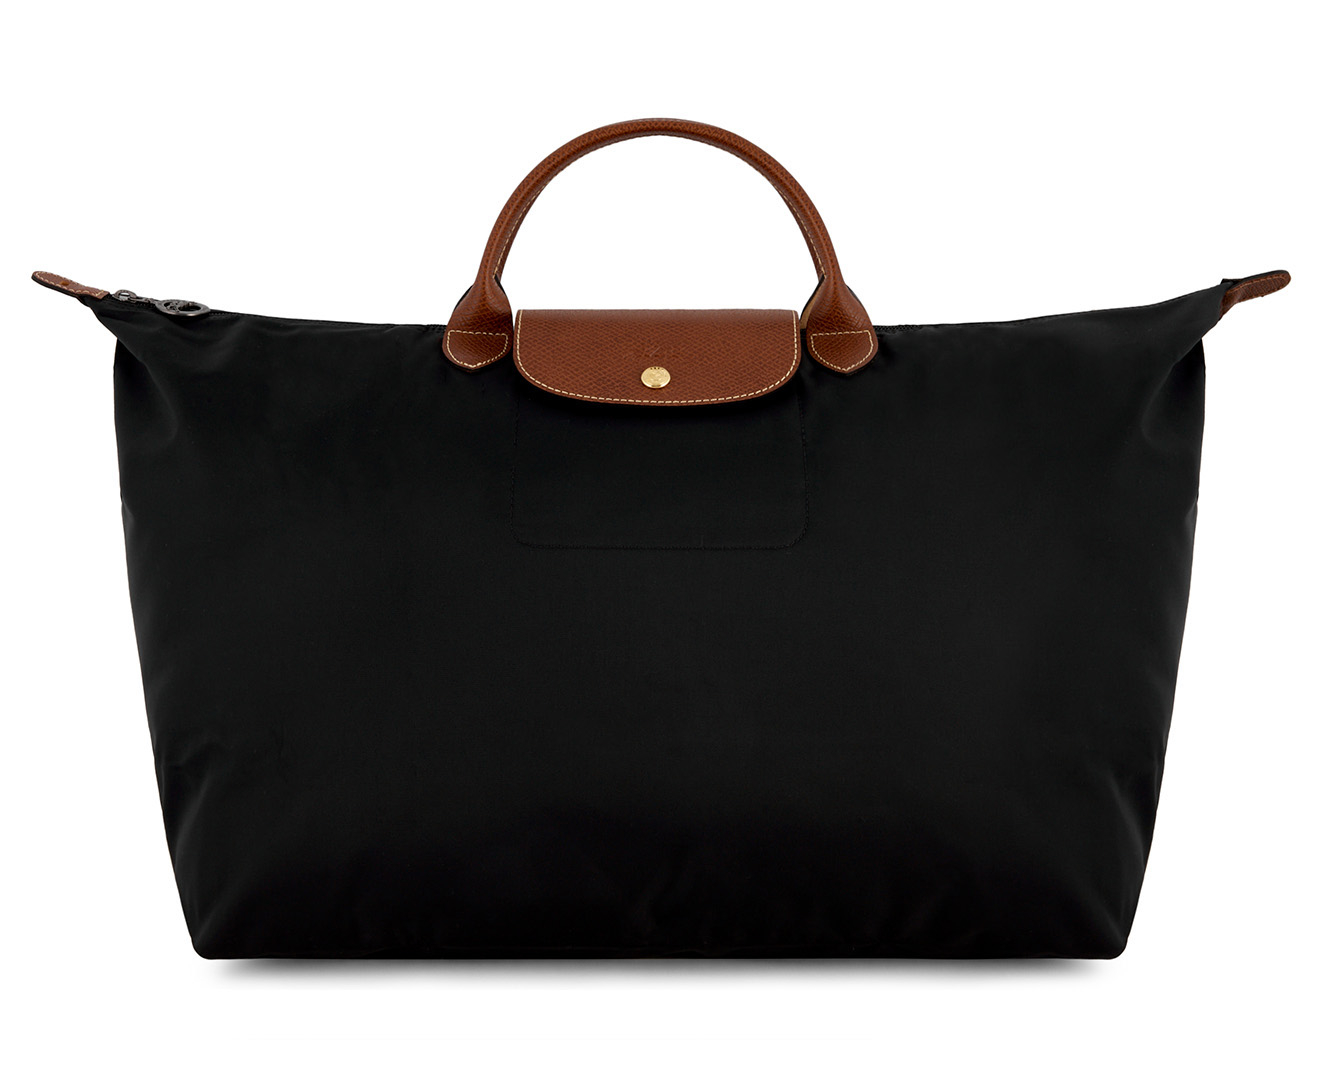 Details more than 67 longchamp black tote bag - in.duhocakina